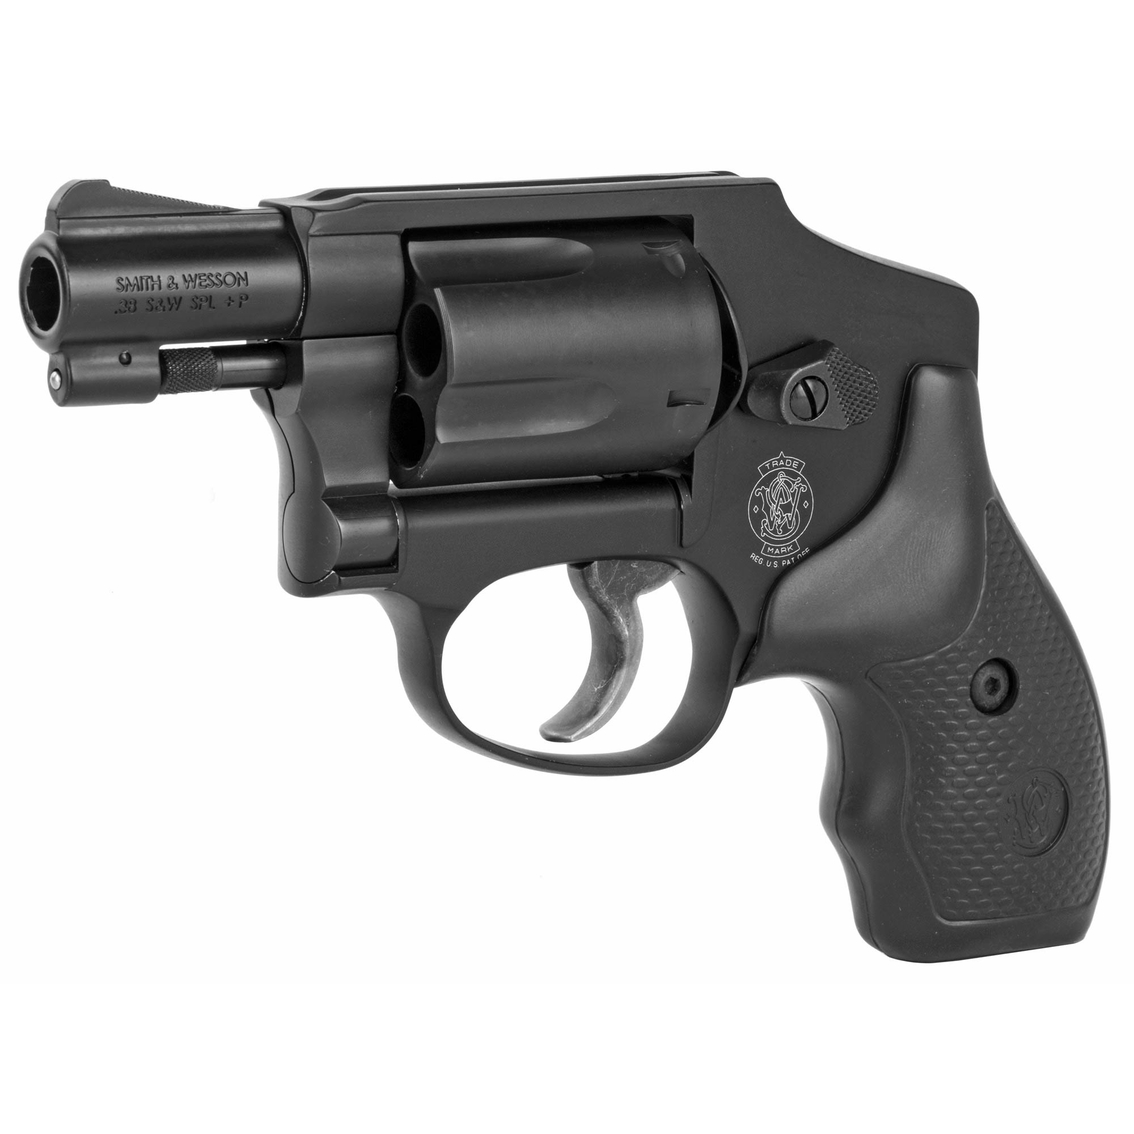 S&W 442 38 Special 1.875 in. Barrel 5 Rds Revolver Black - Image 3 of 3